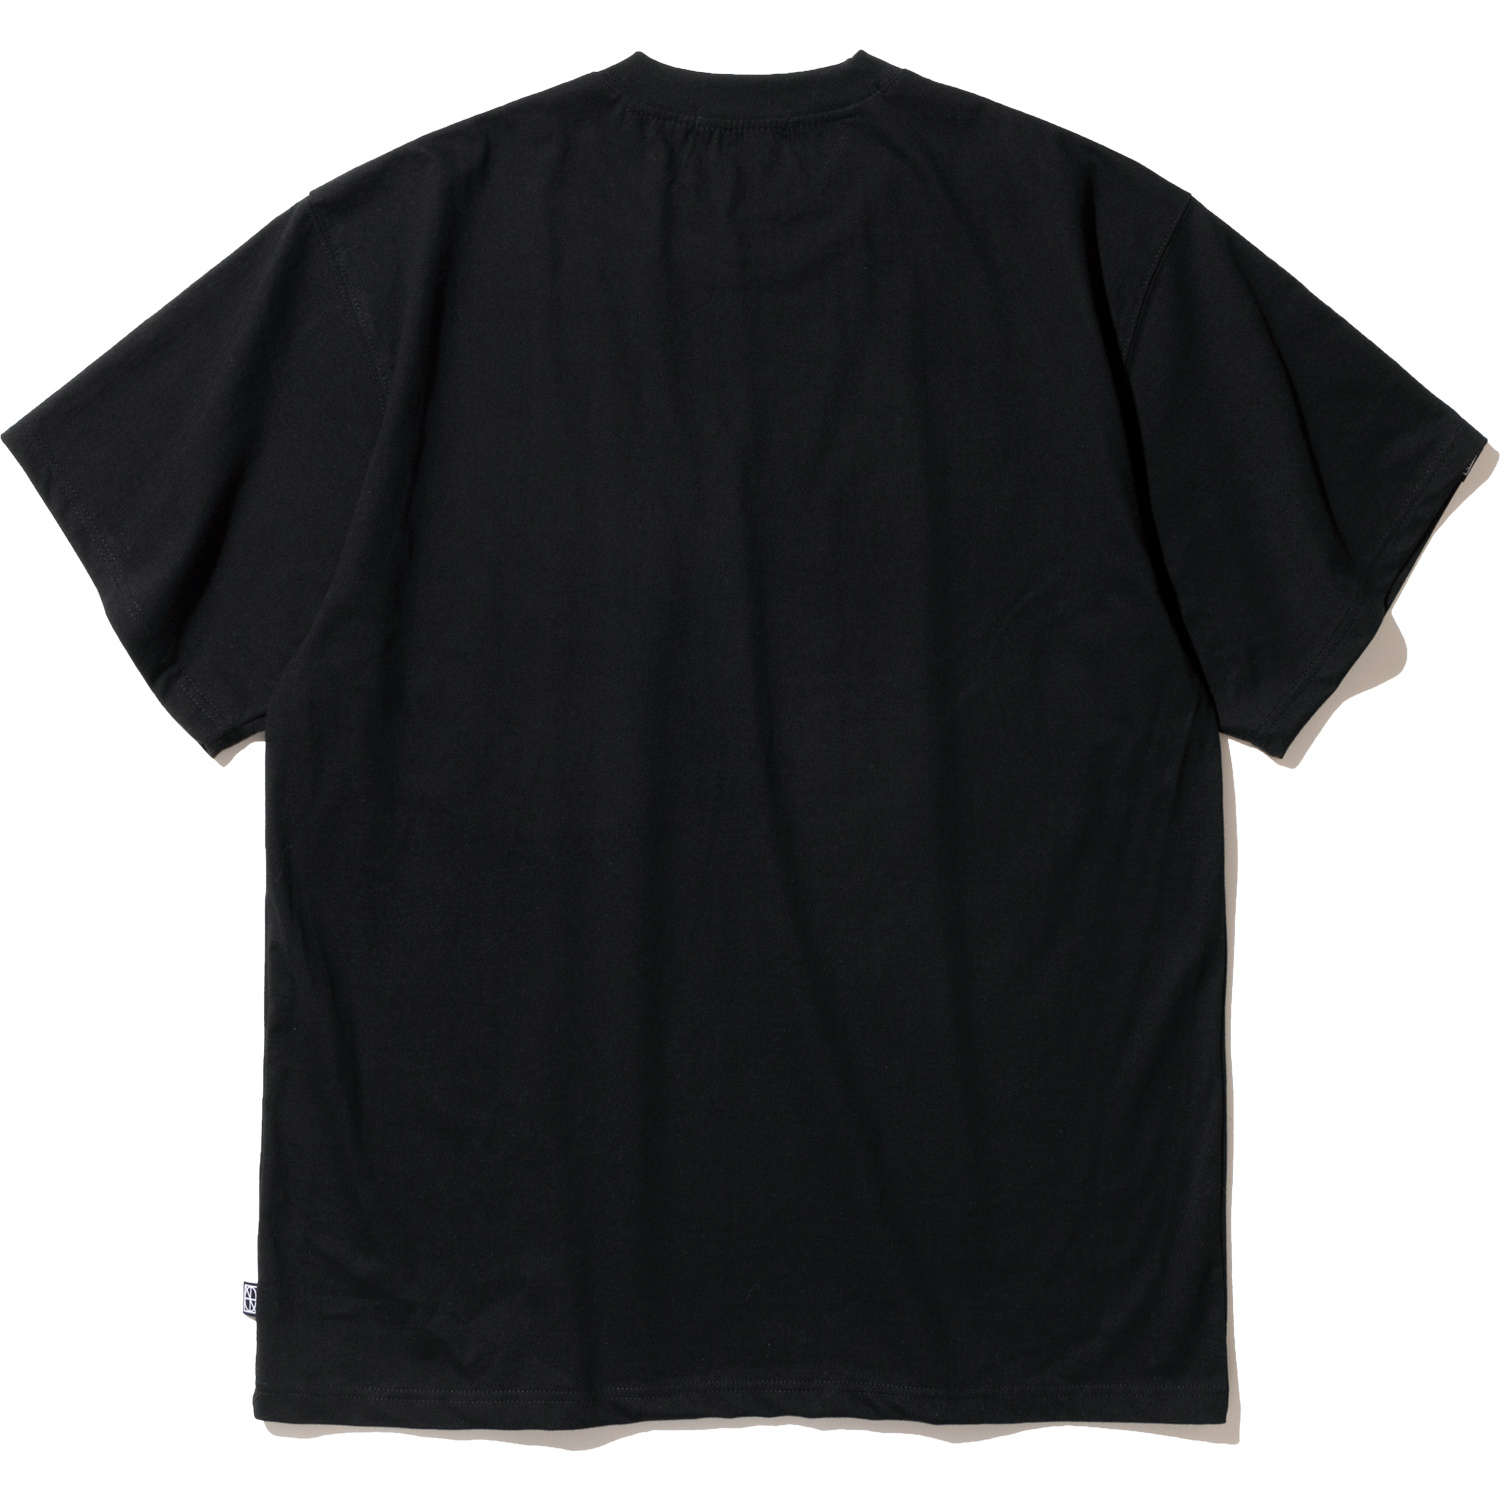 Pick up T-Shirts - Black,NOT4NERD